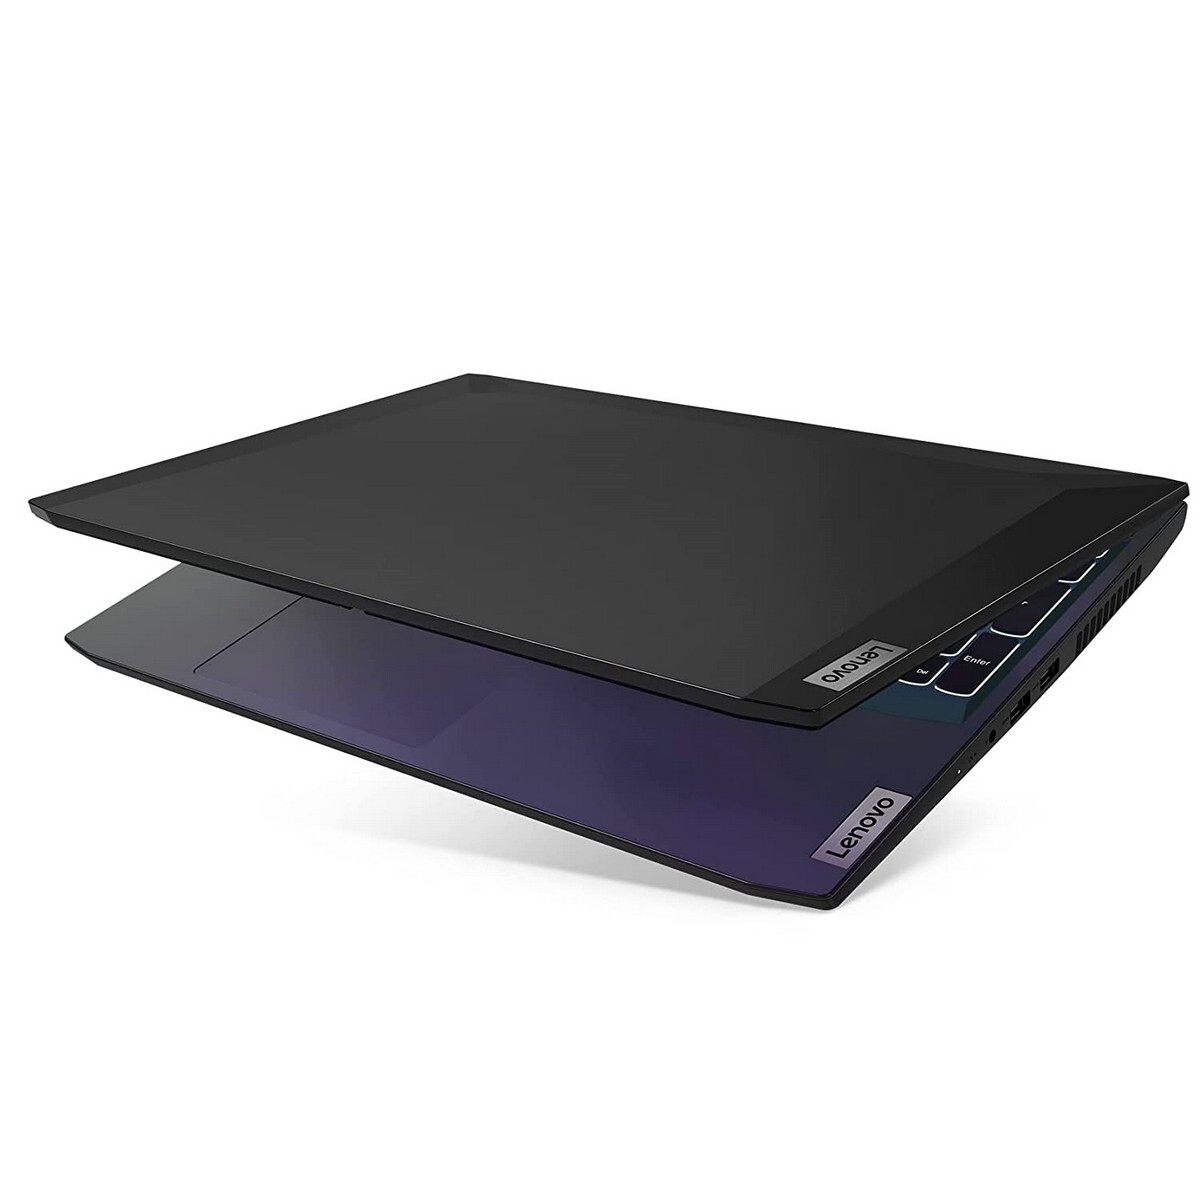 Lenovo IdeaPad Gaming 3 Core i5 11th Gen 8 GB/512 GB SSD/Win10 Home 4 GB Graphics Gaming Laptop